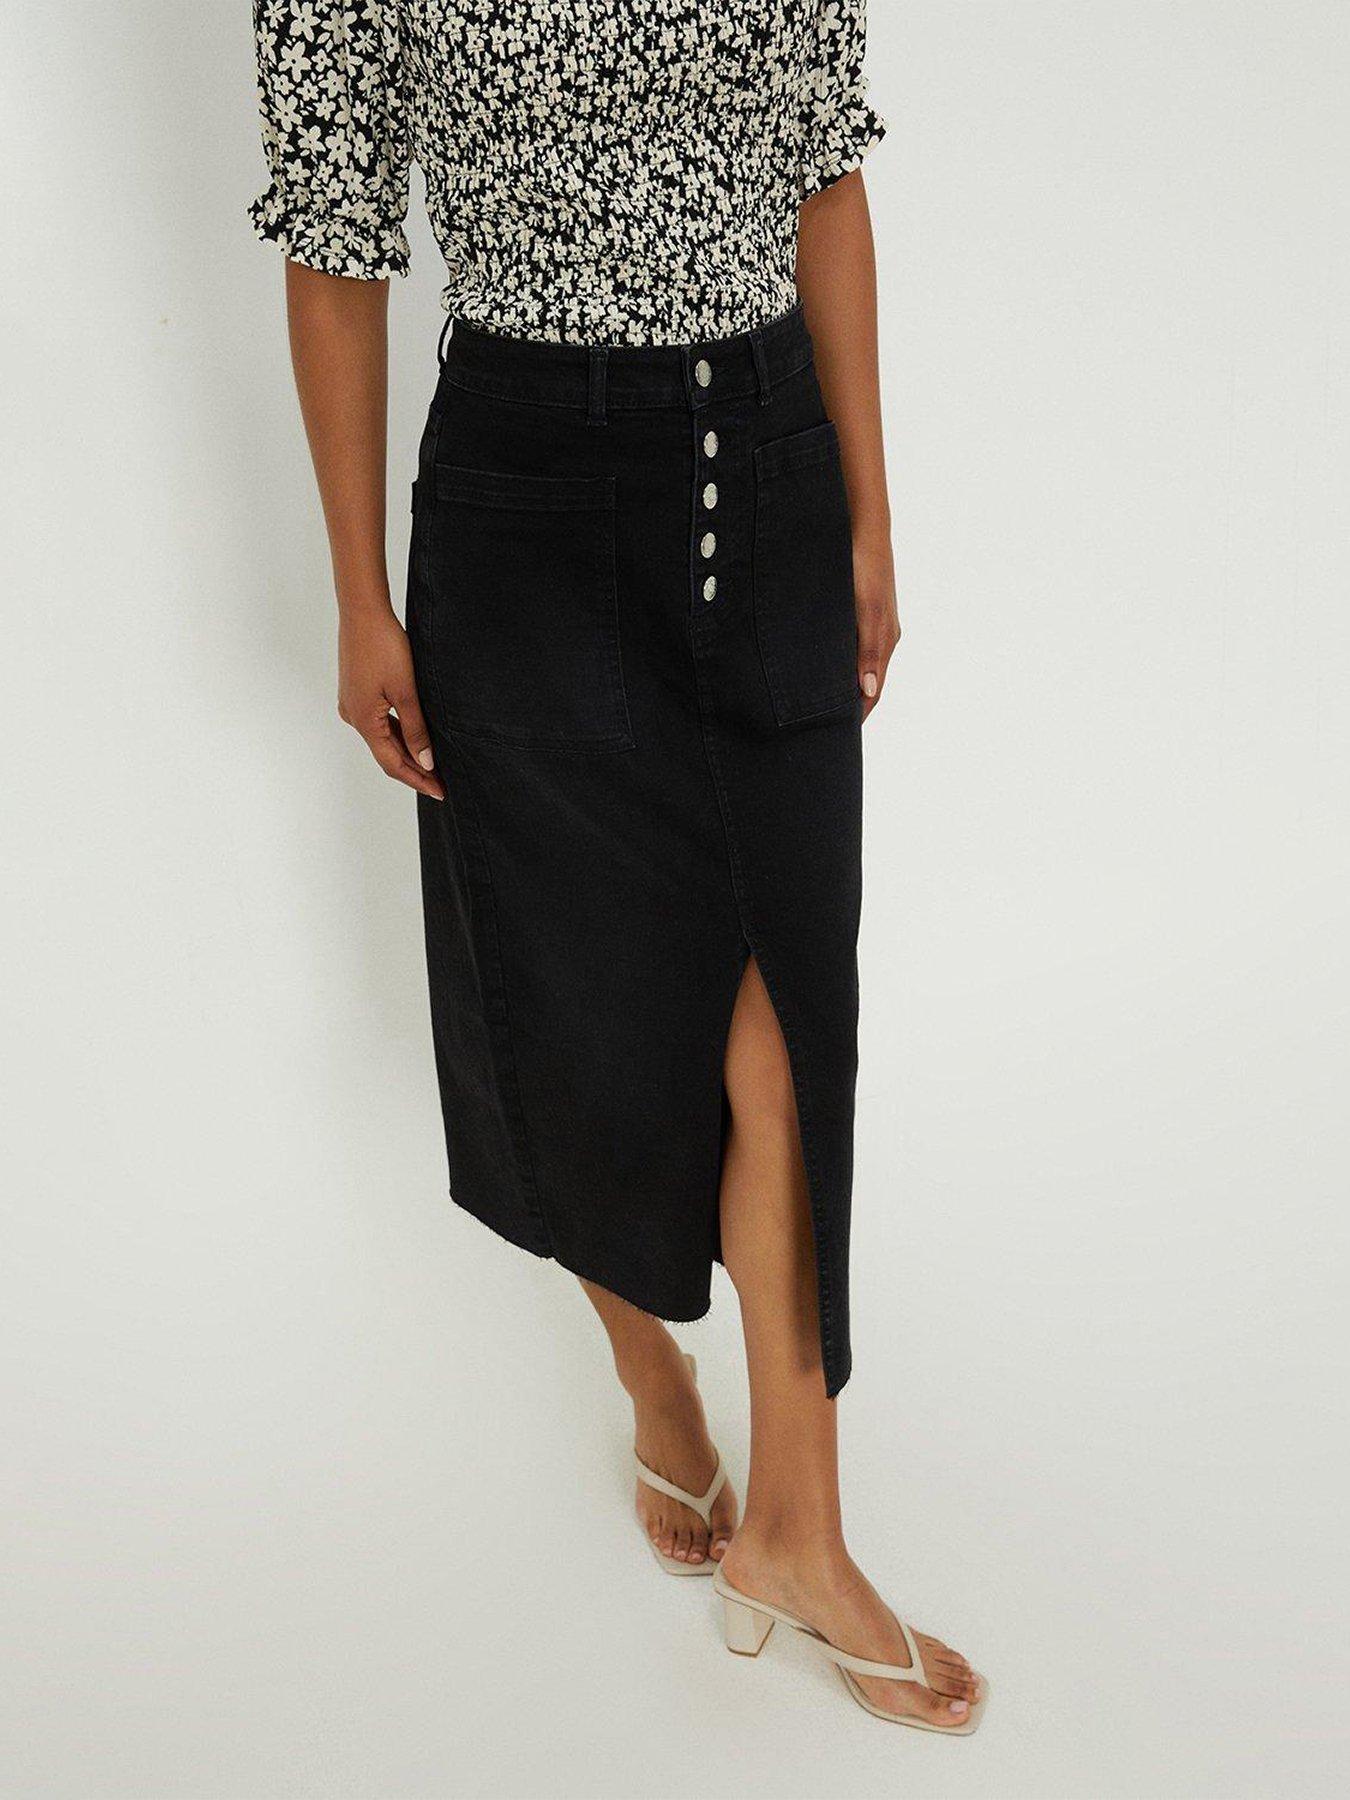 Shop Dorothy Perkins Women's Linen Skirts up to 75% Off | DealDoodle